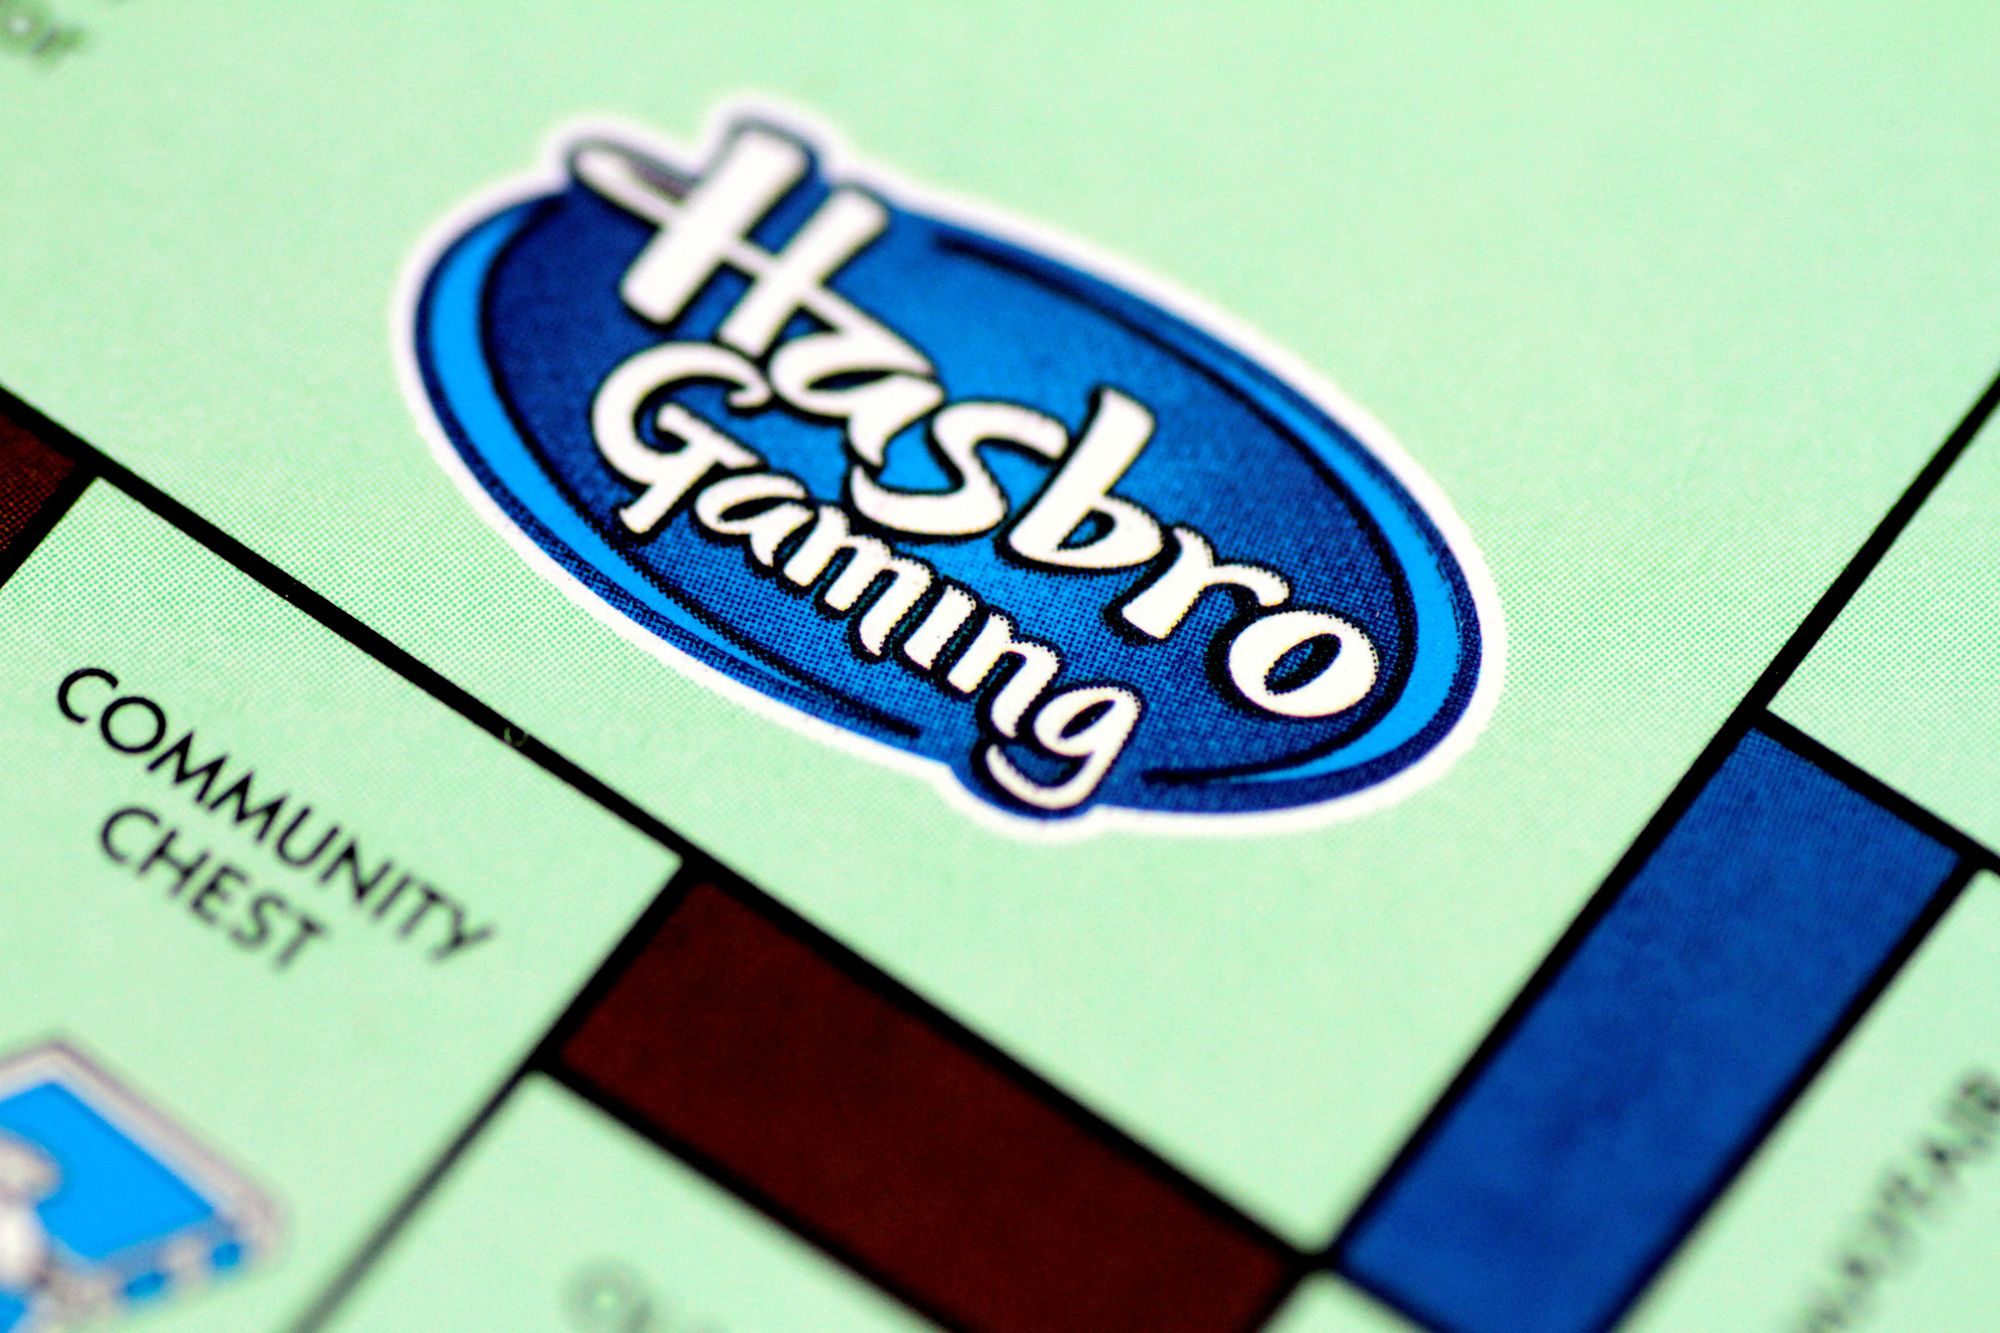 Hasbro laying off 1,100 employees